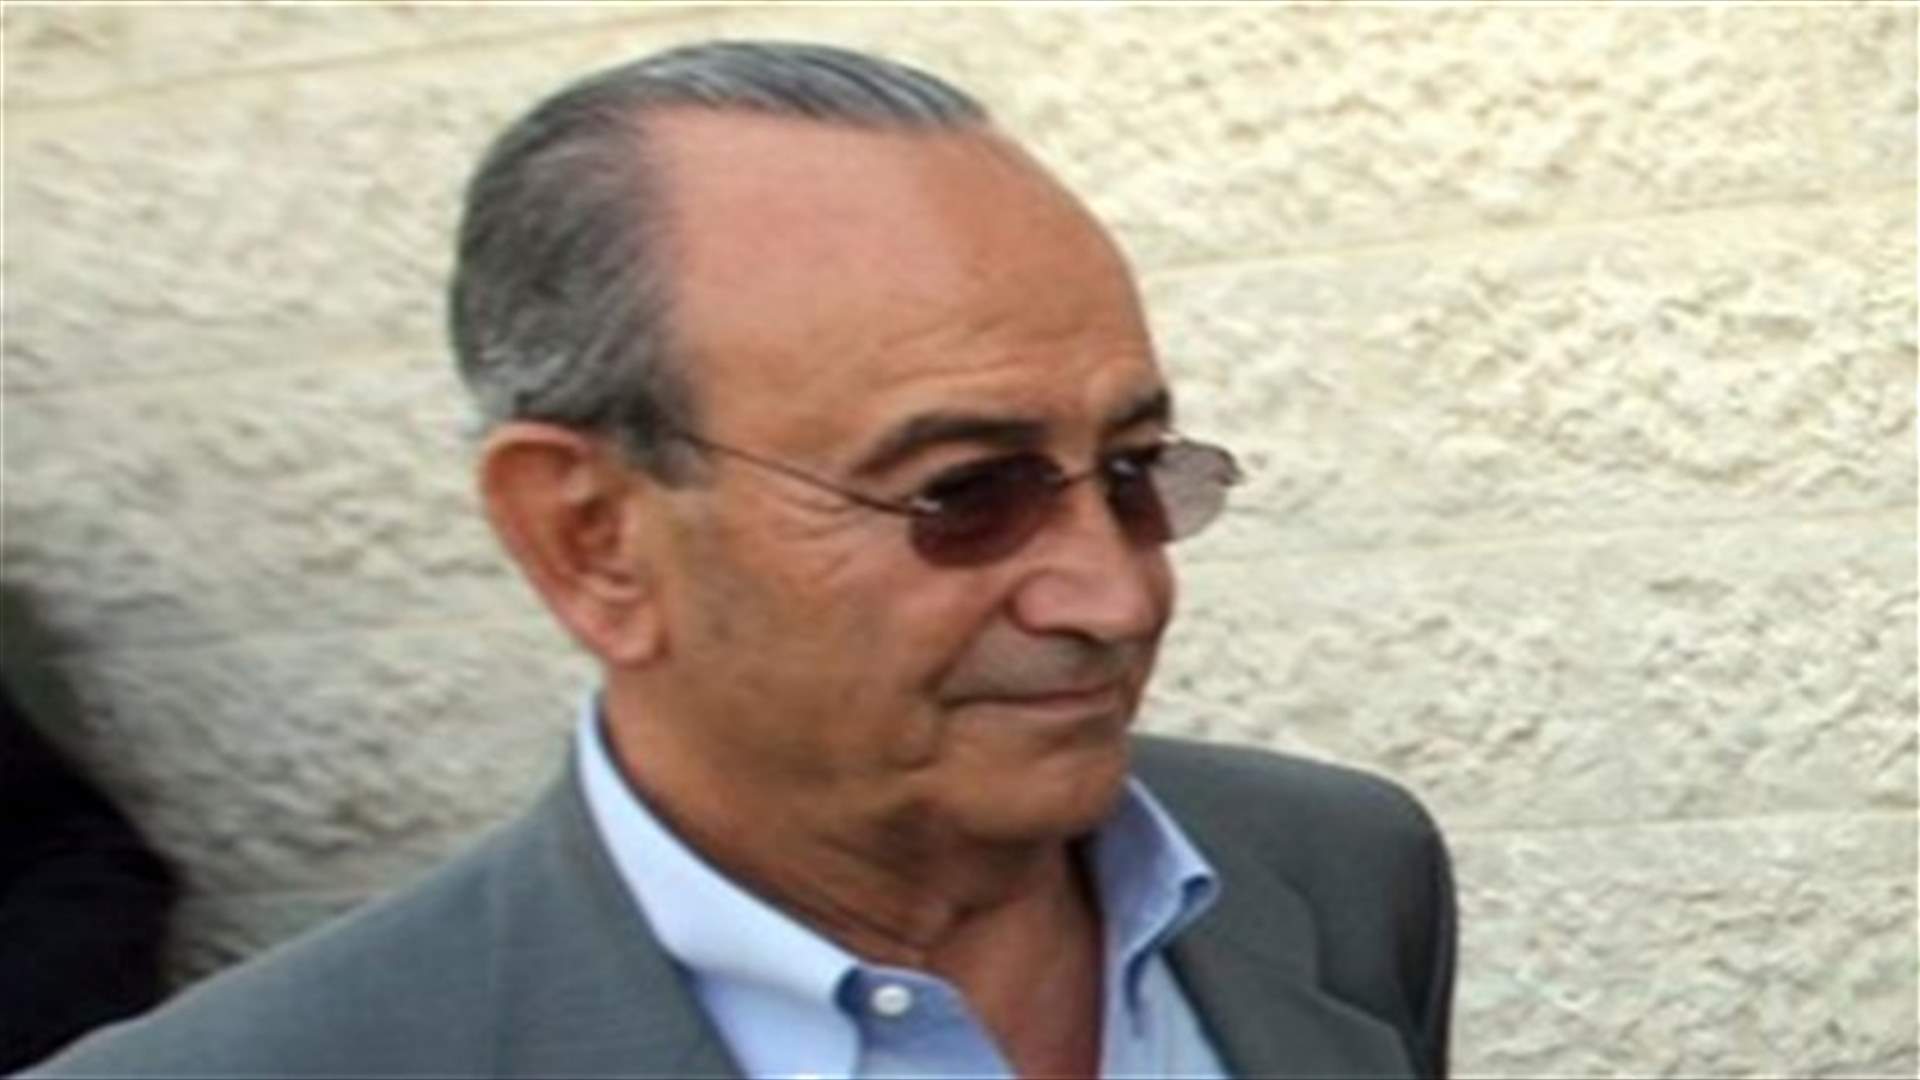 Palestinian billionaire Masri detained in Saudi Arabia -  sources